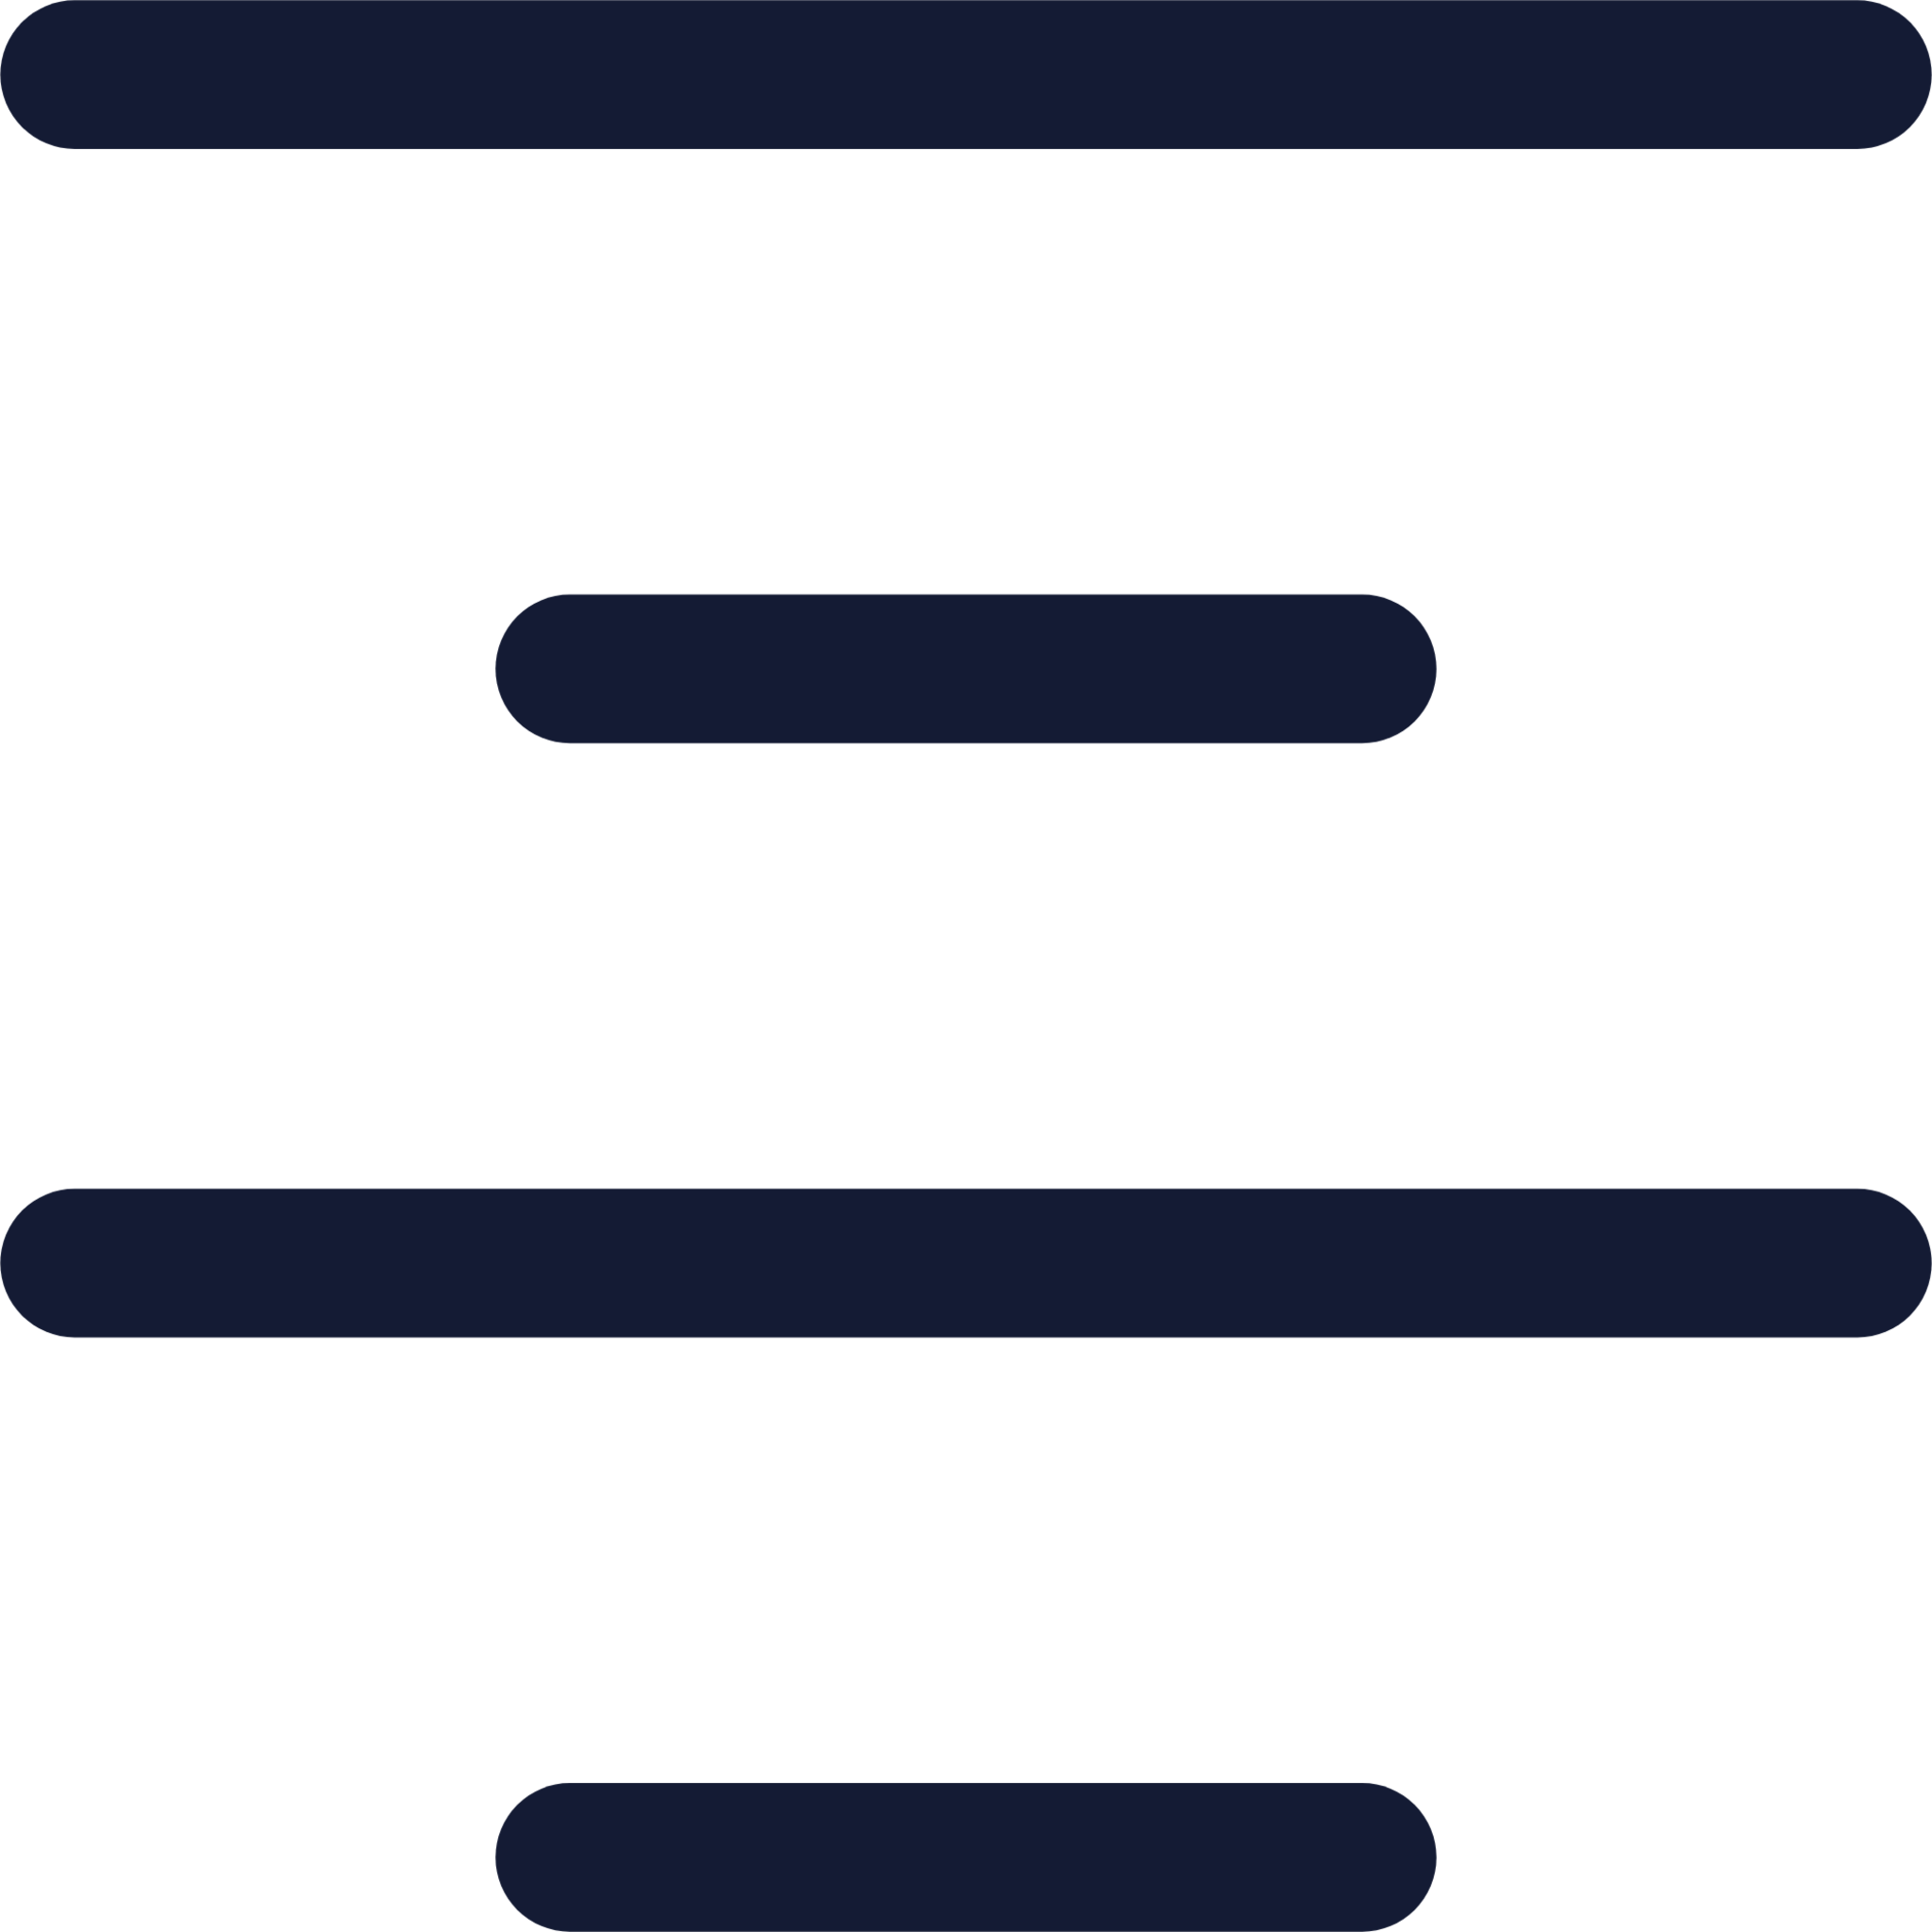 text align center icon